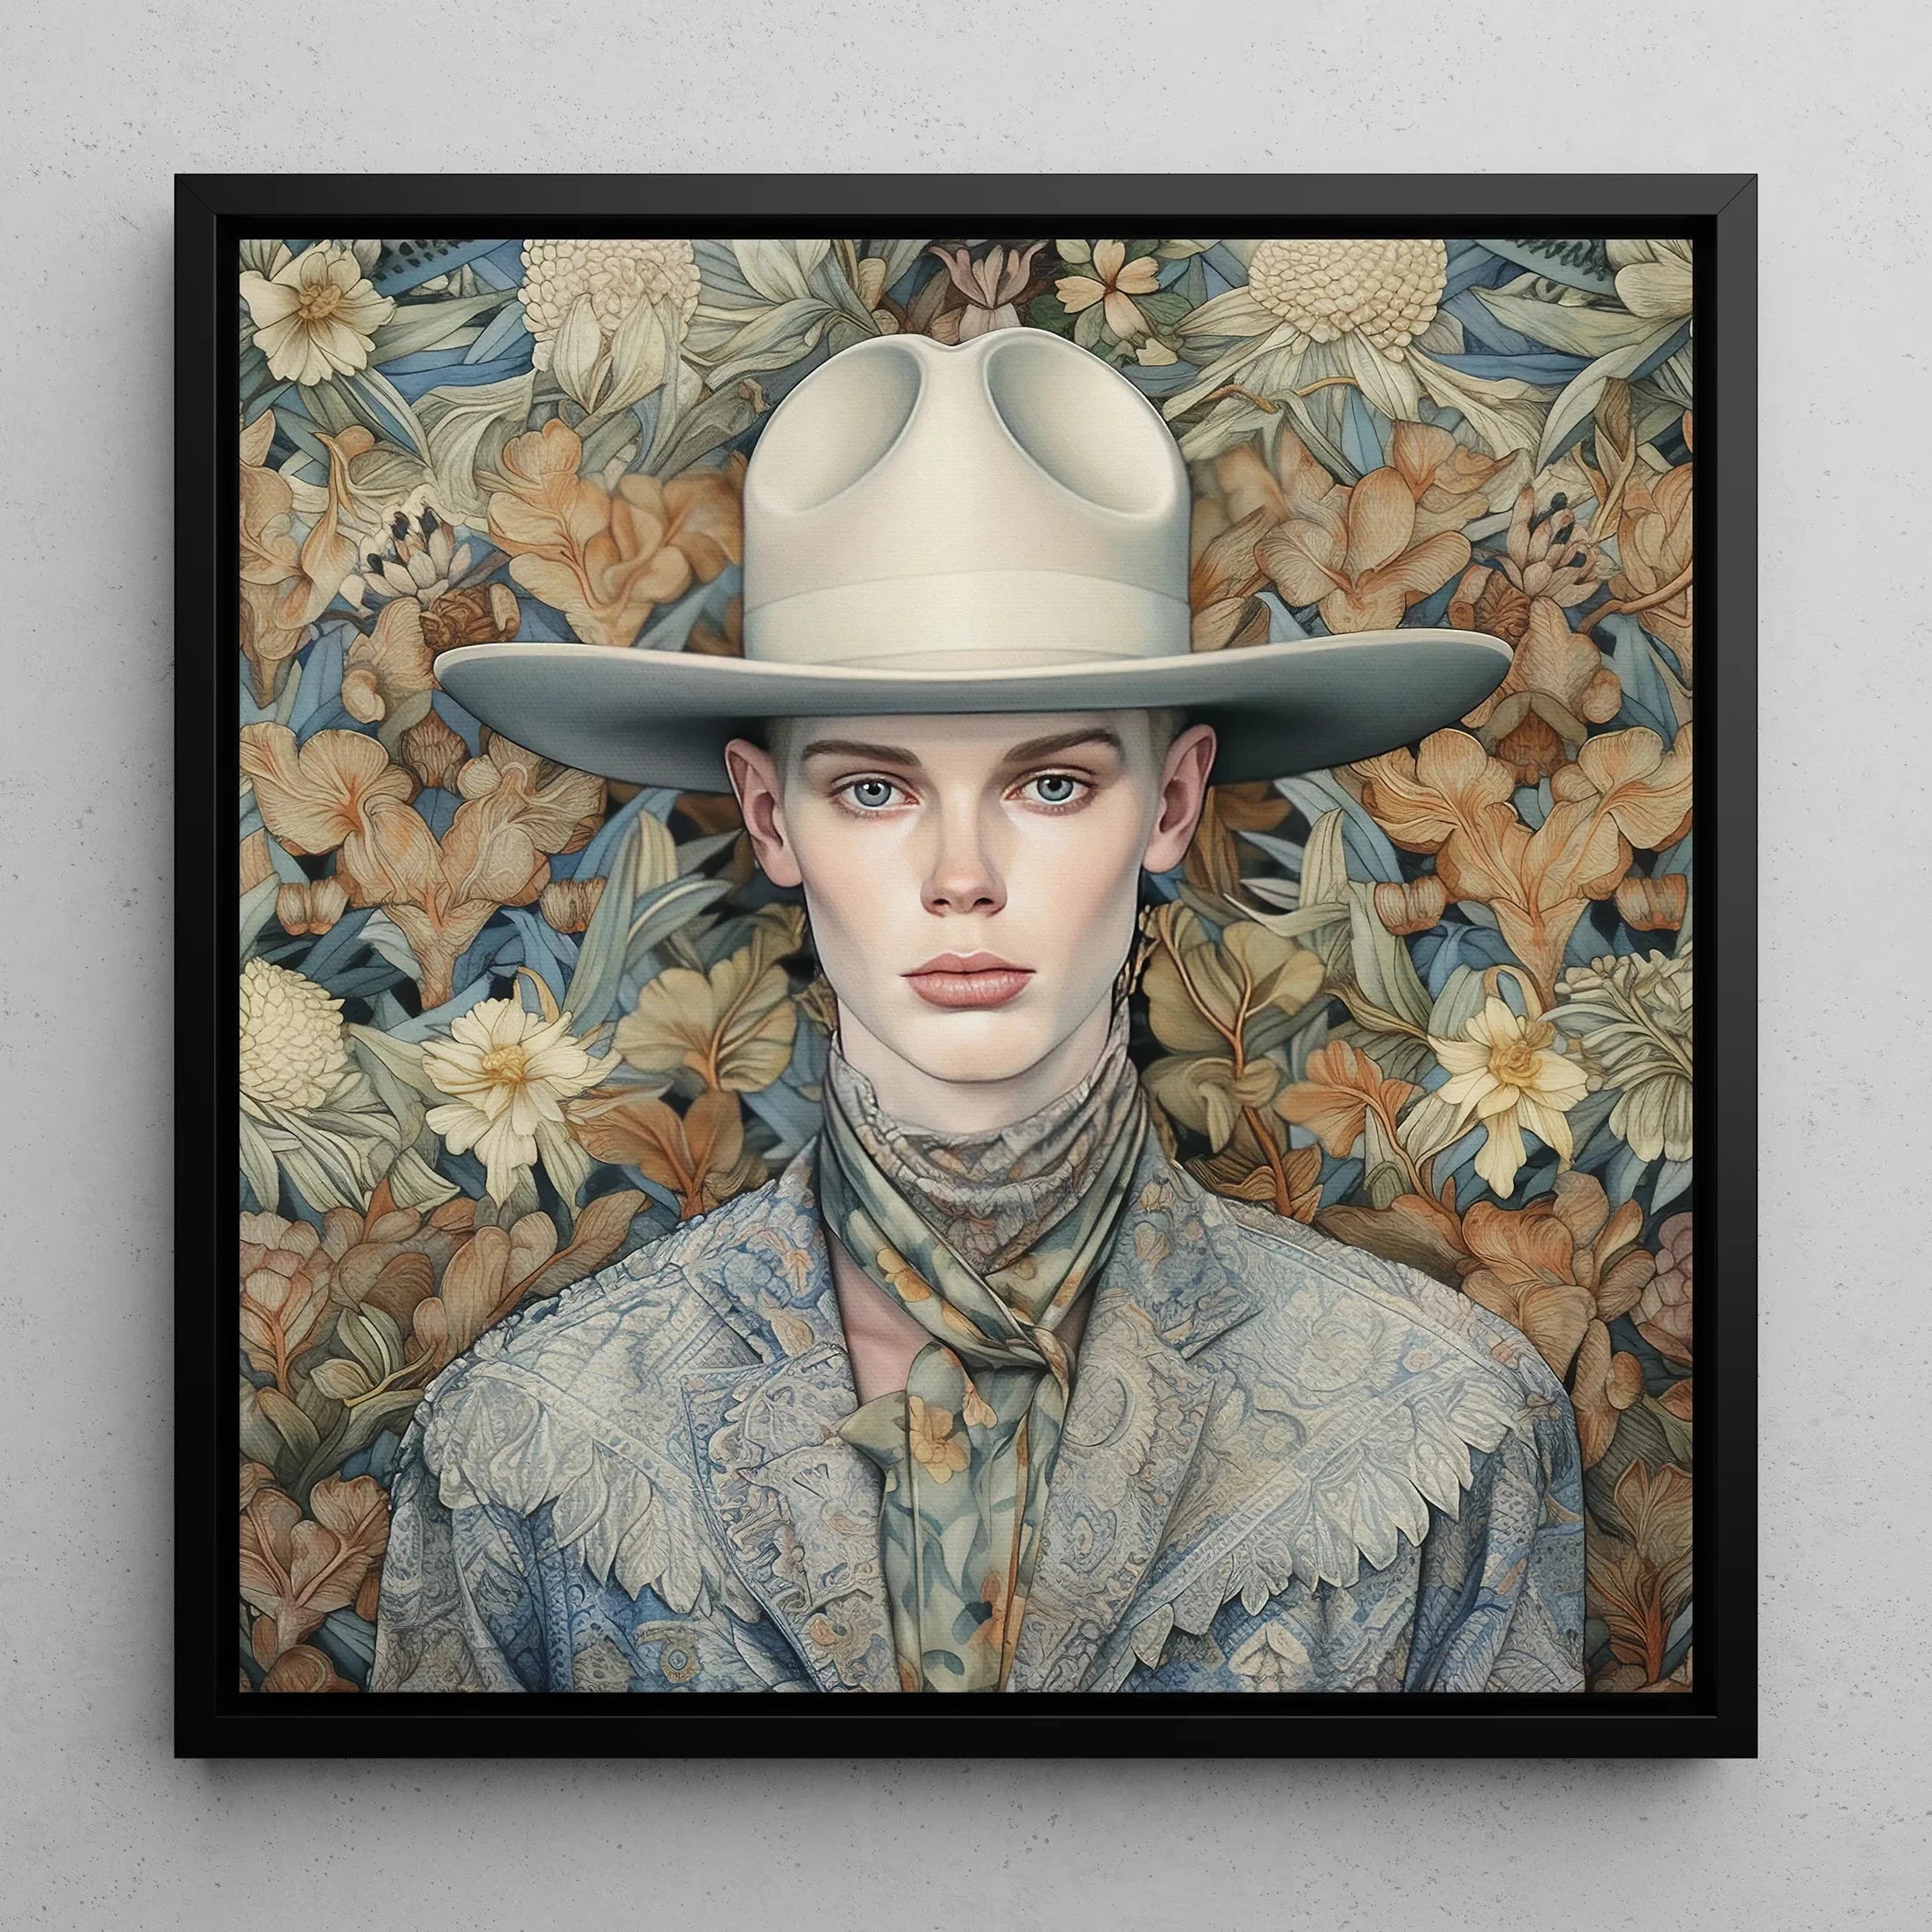 Jasper - Dandy Twink Cowboy Float Frame Canvas - 16’x16’ - Posters Prints & Visual Artwork - Aesthetic Art